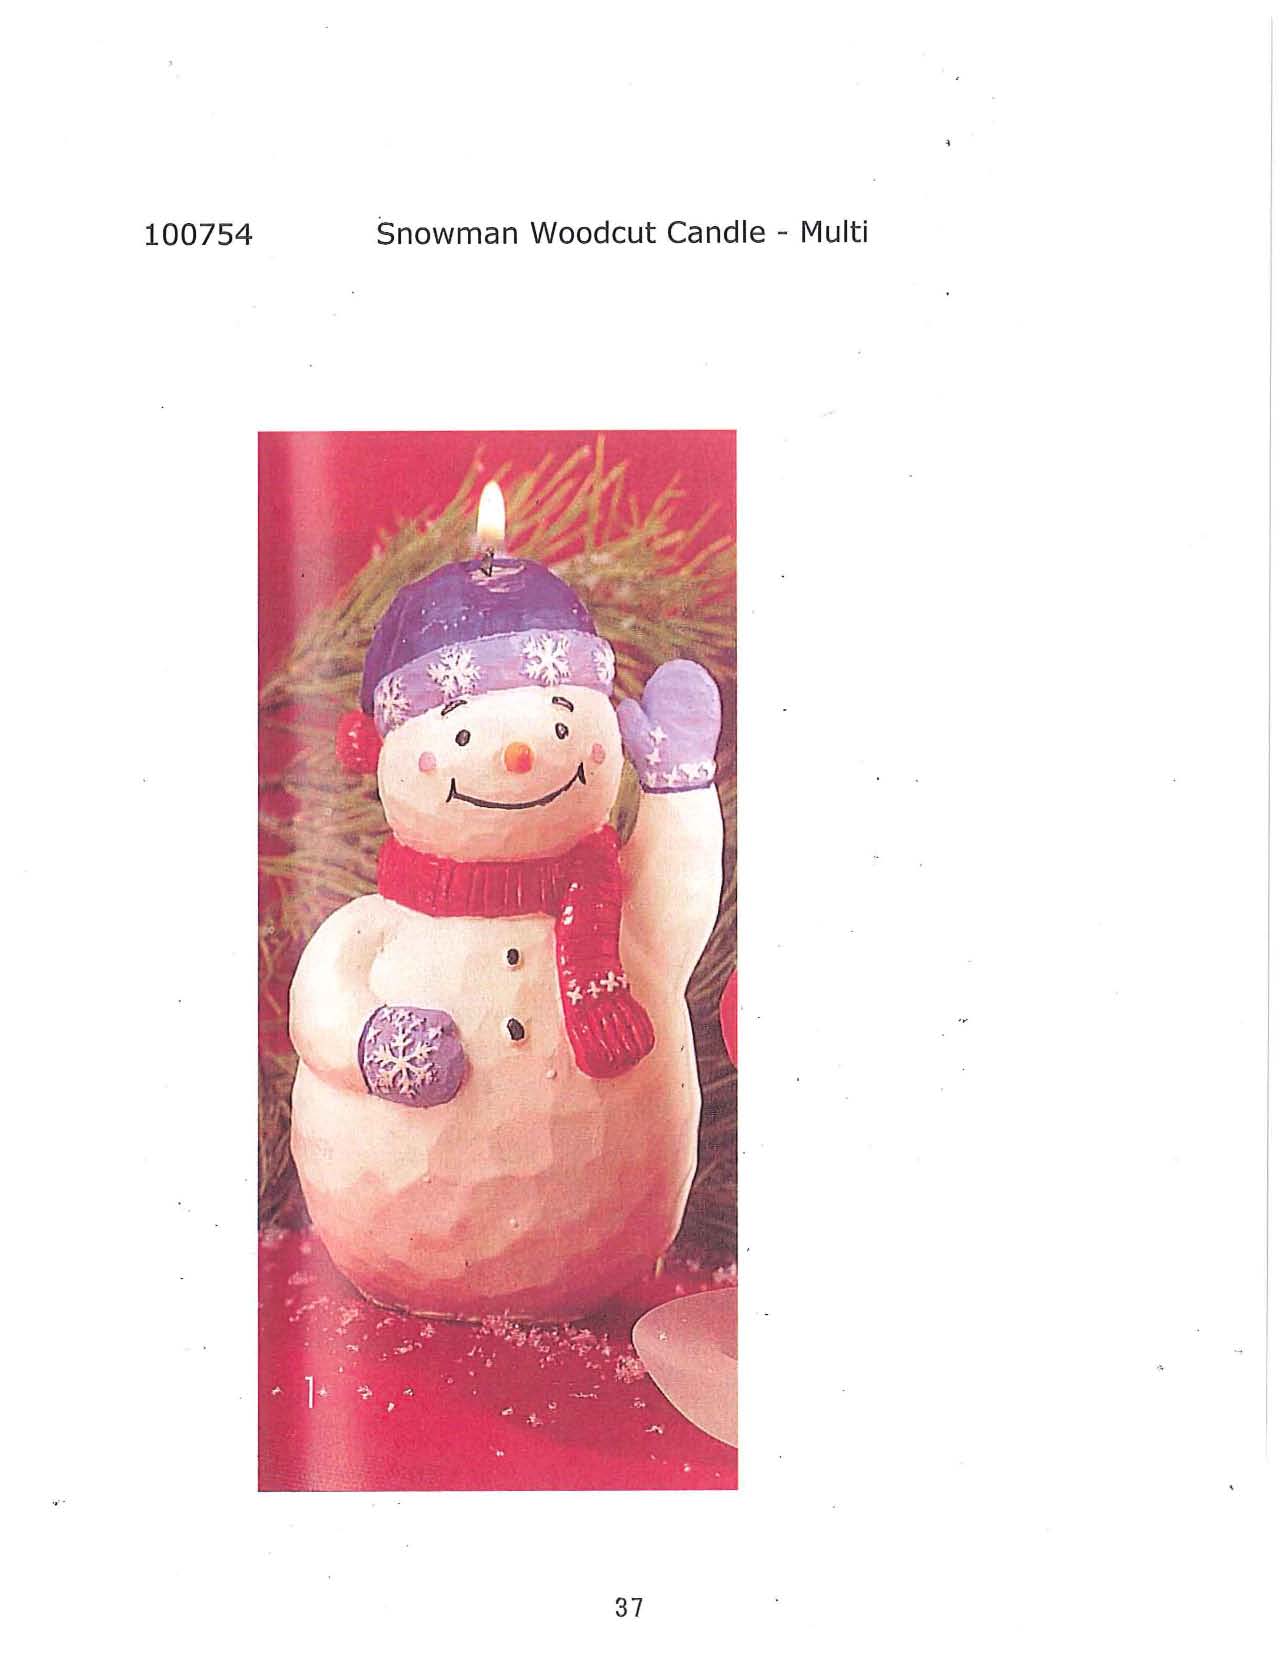 Snowman Woodcut Candle - Multi